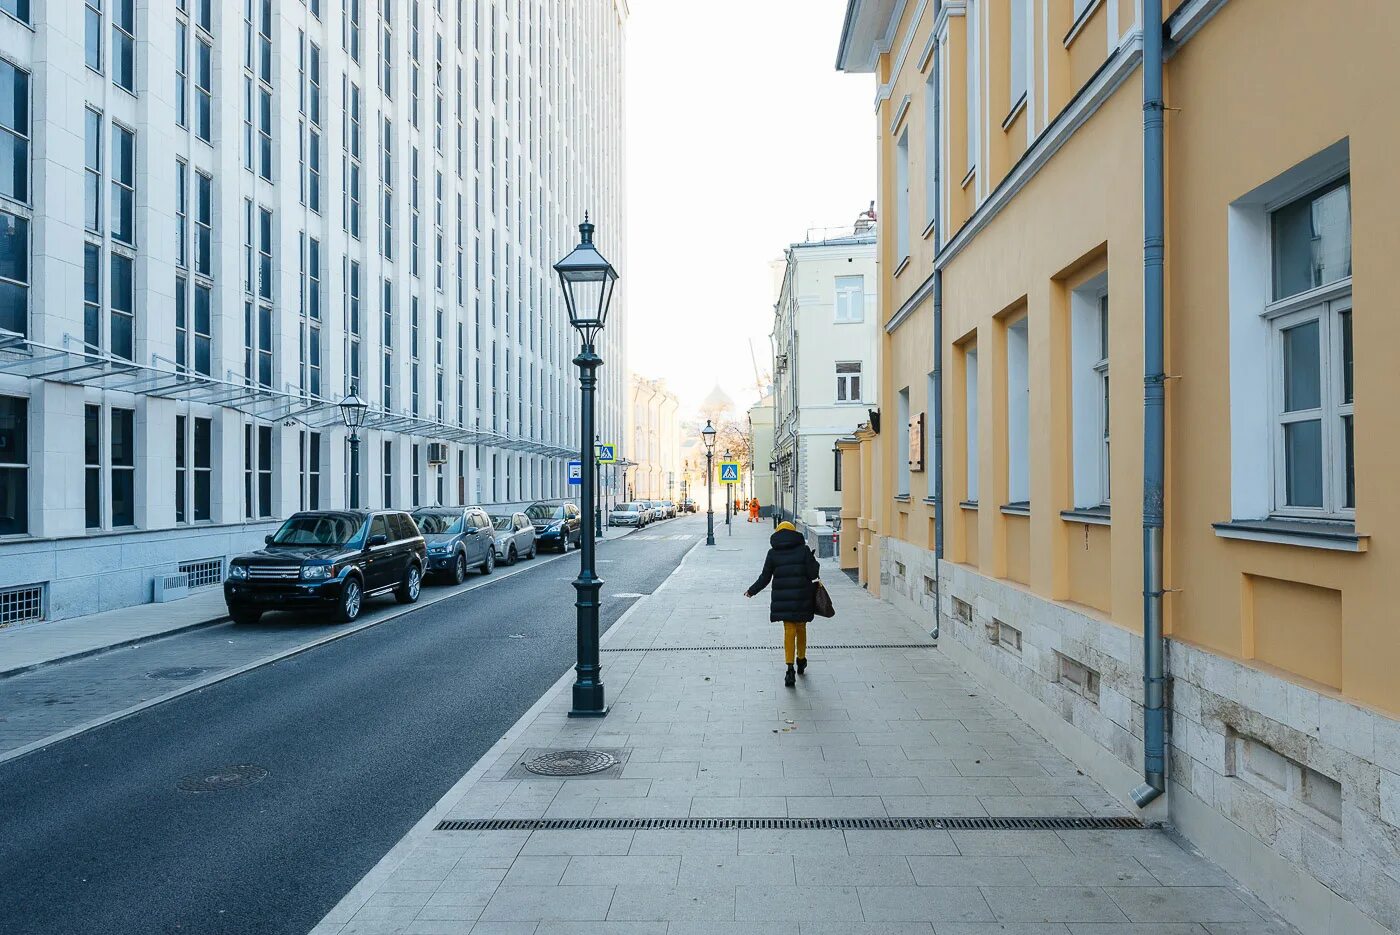 Улицы тет. Красивые улицы Москвы. Фон улицы Москвы. Московская улочка. Красивые улочки Москвы.